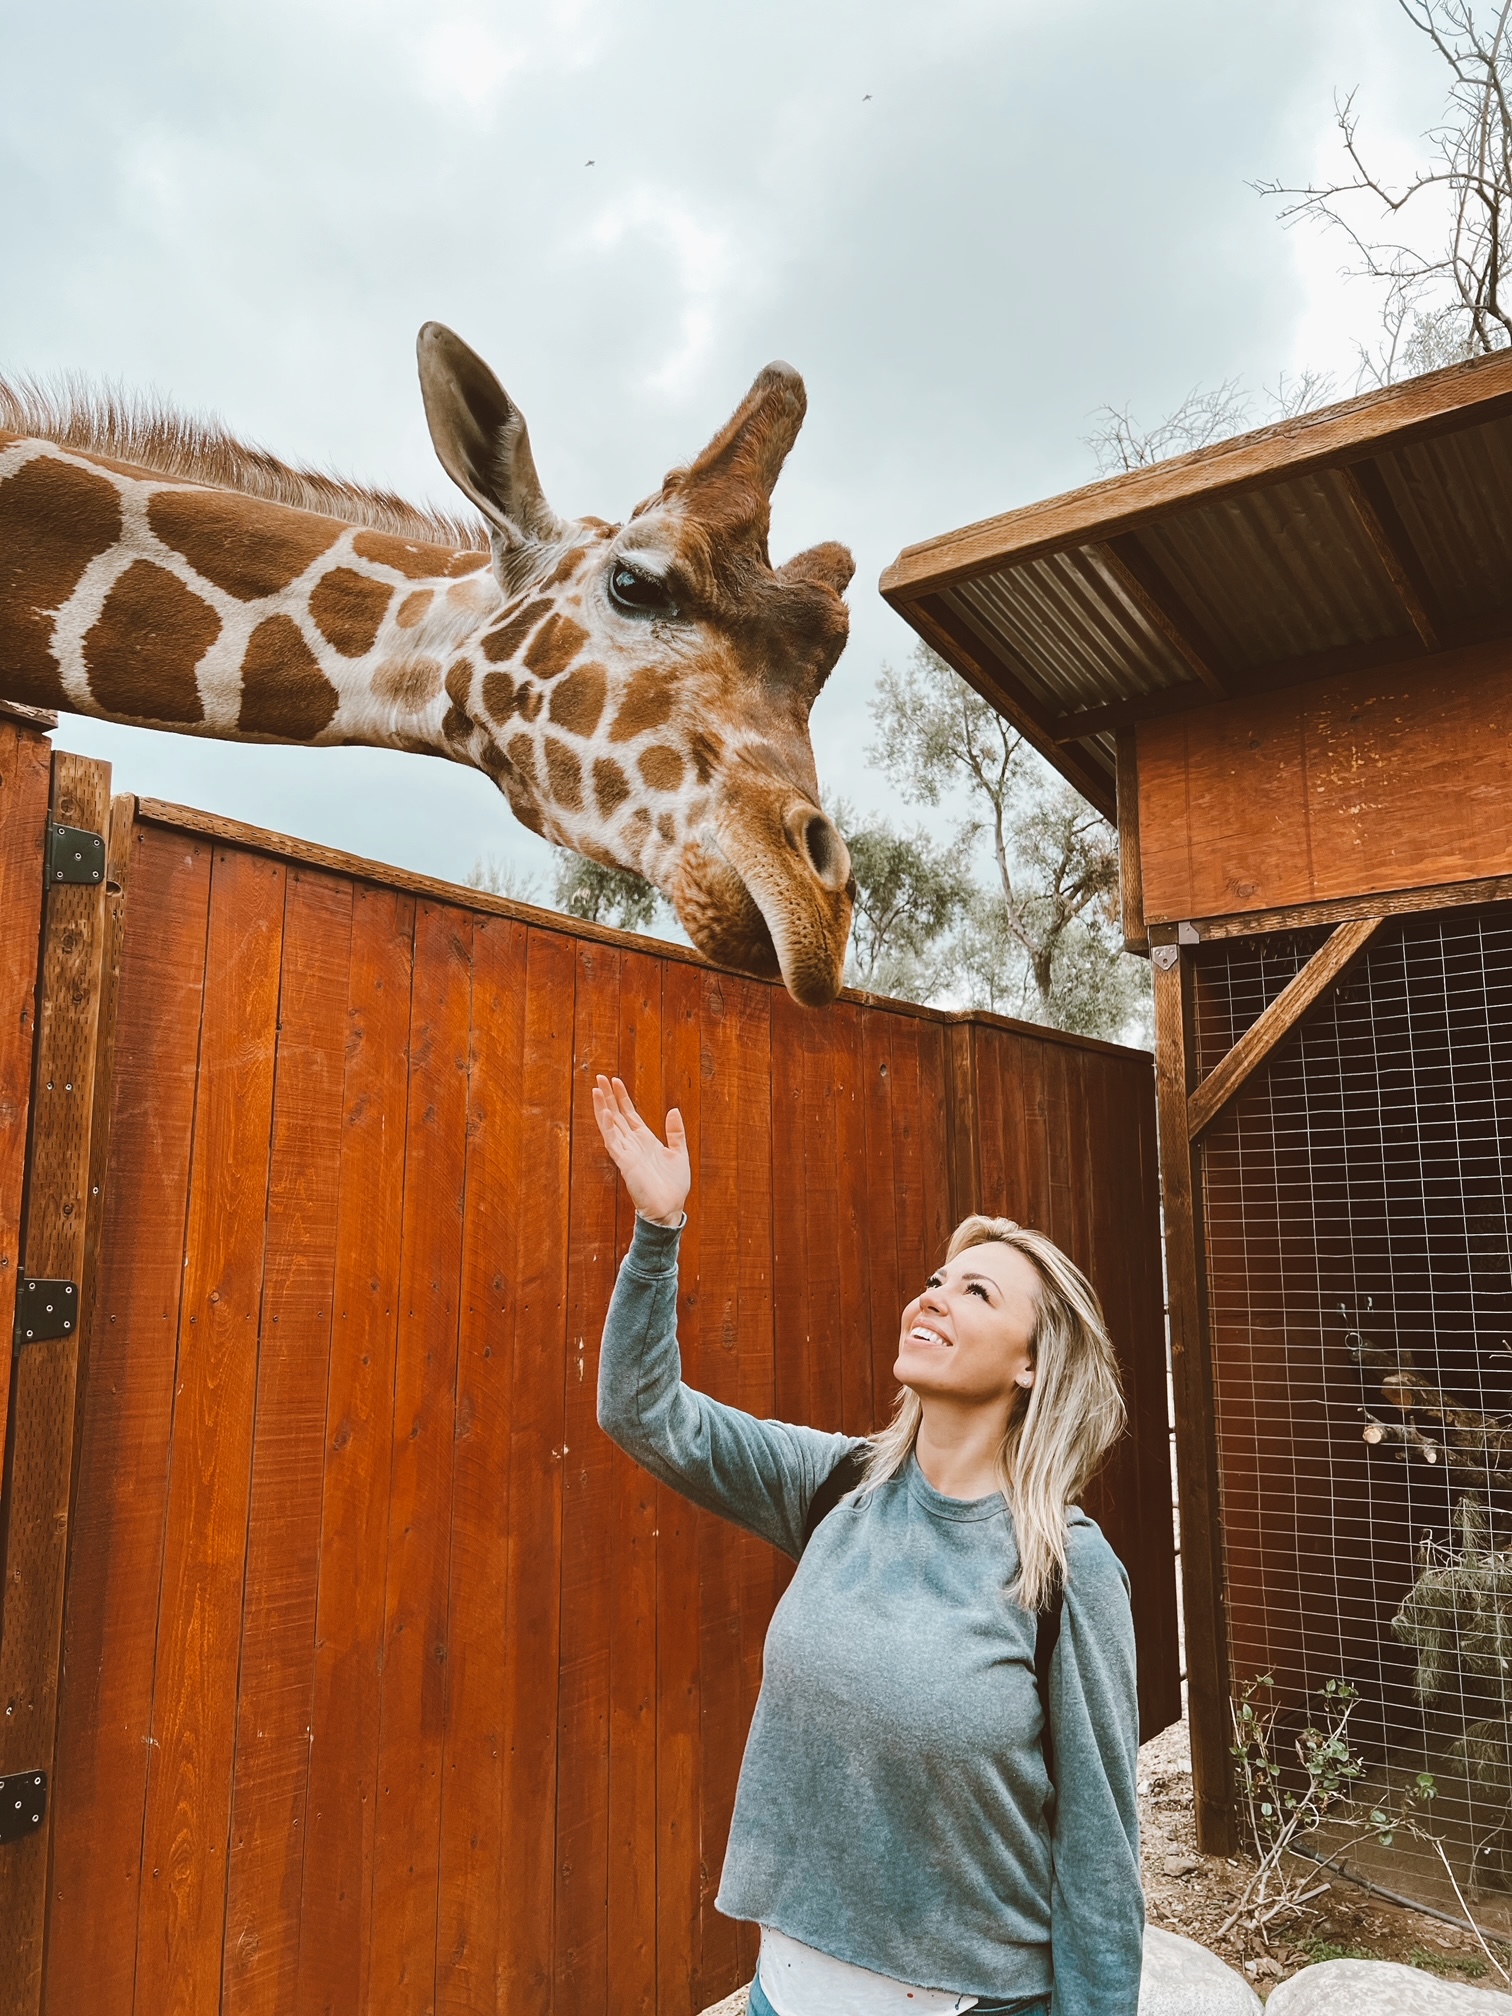 Jessica Hall with a giraffe. 